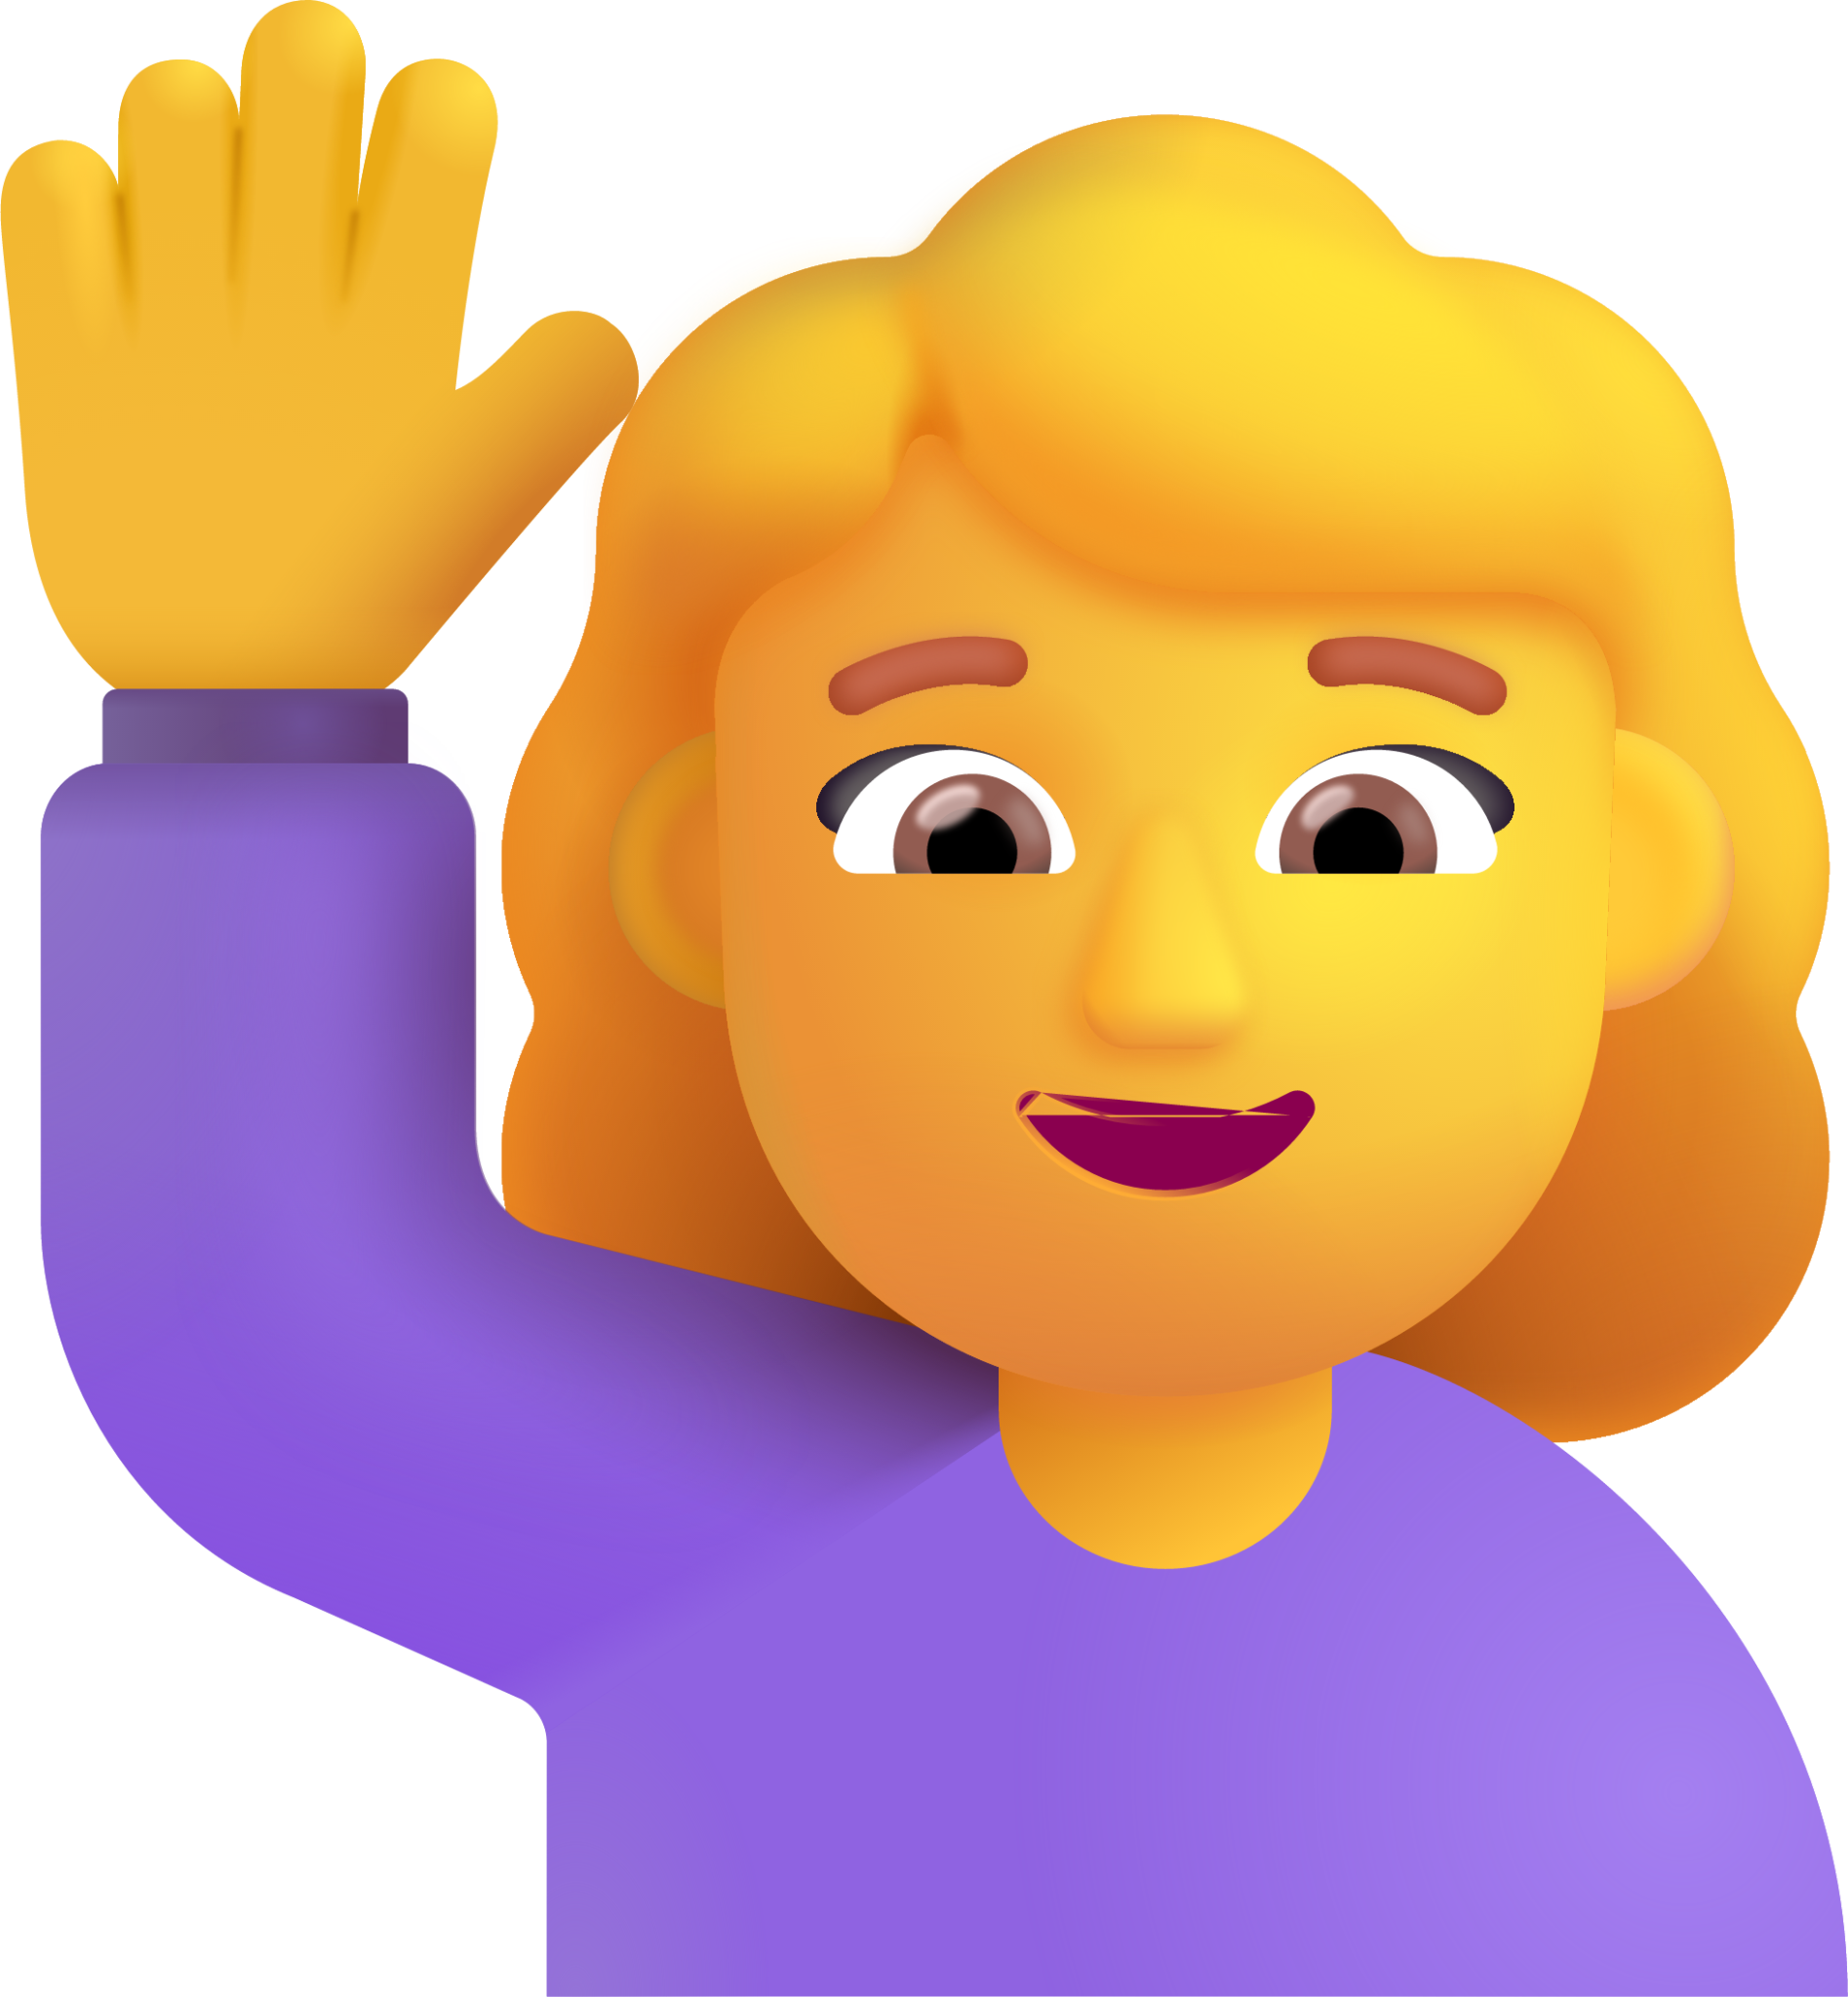 woman raising hand default emoji